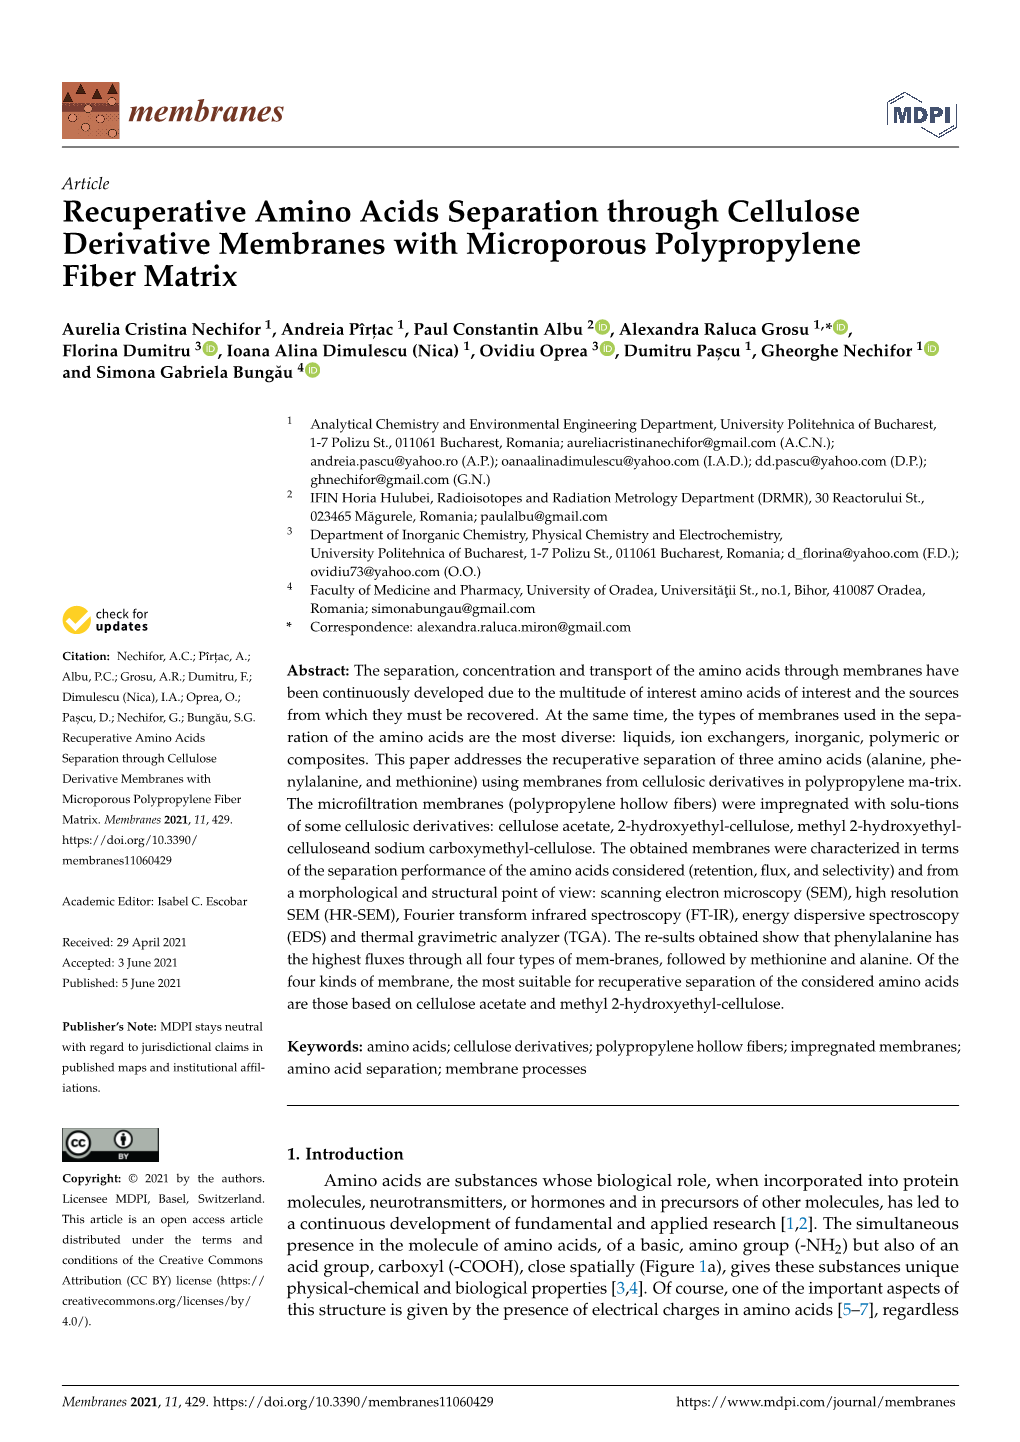 Recuperative Amino Acids Separation Through Cellulose Derivative Membranes with Microporous Polypropylene Fiber Matrix